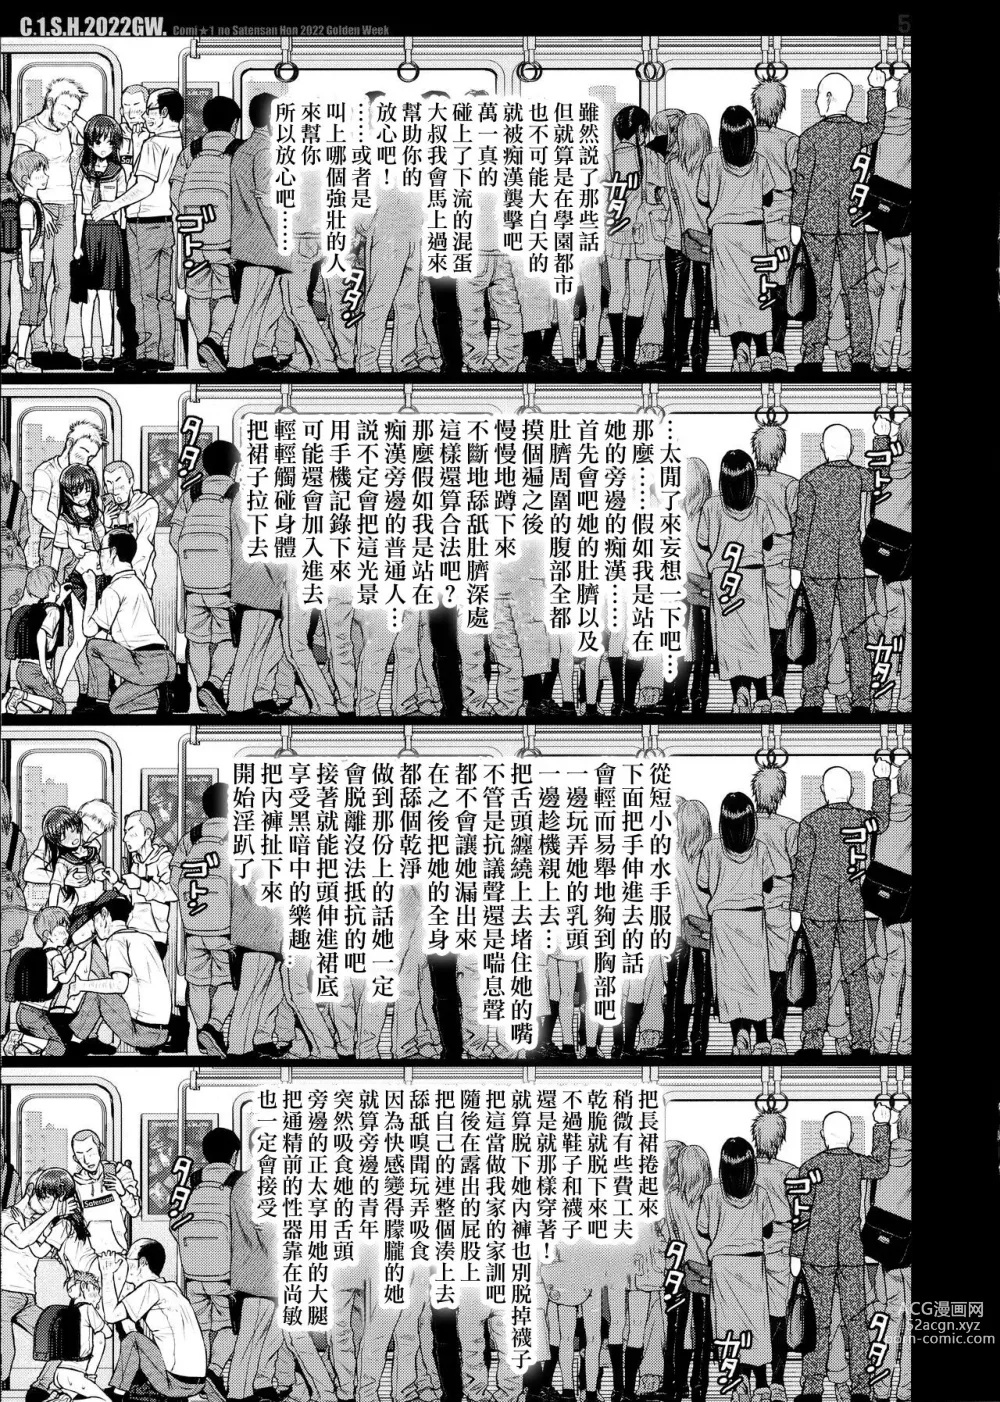 Page 5 of doujinshi C☆1.S.H.2022GW.